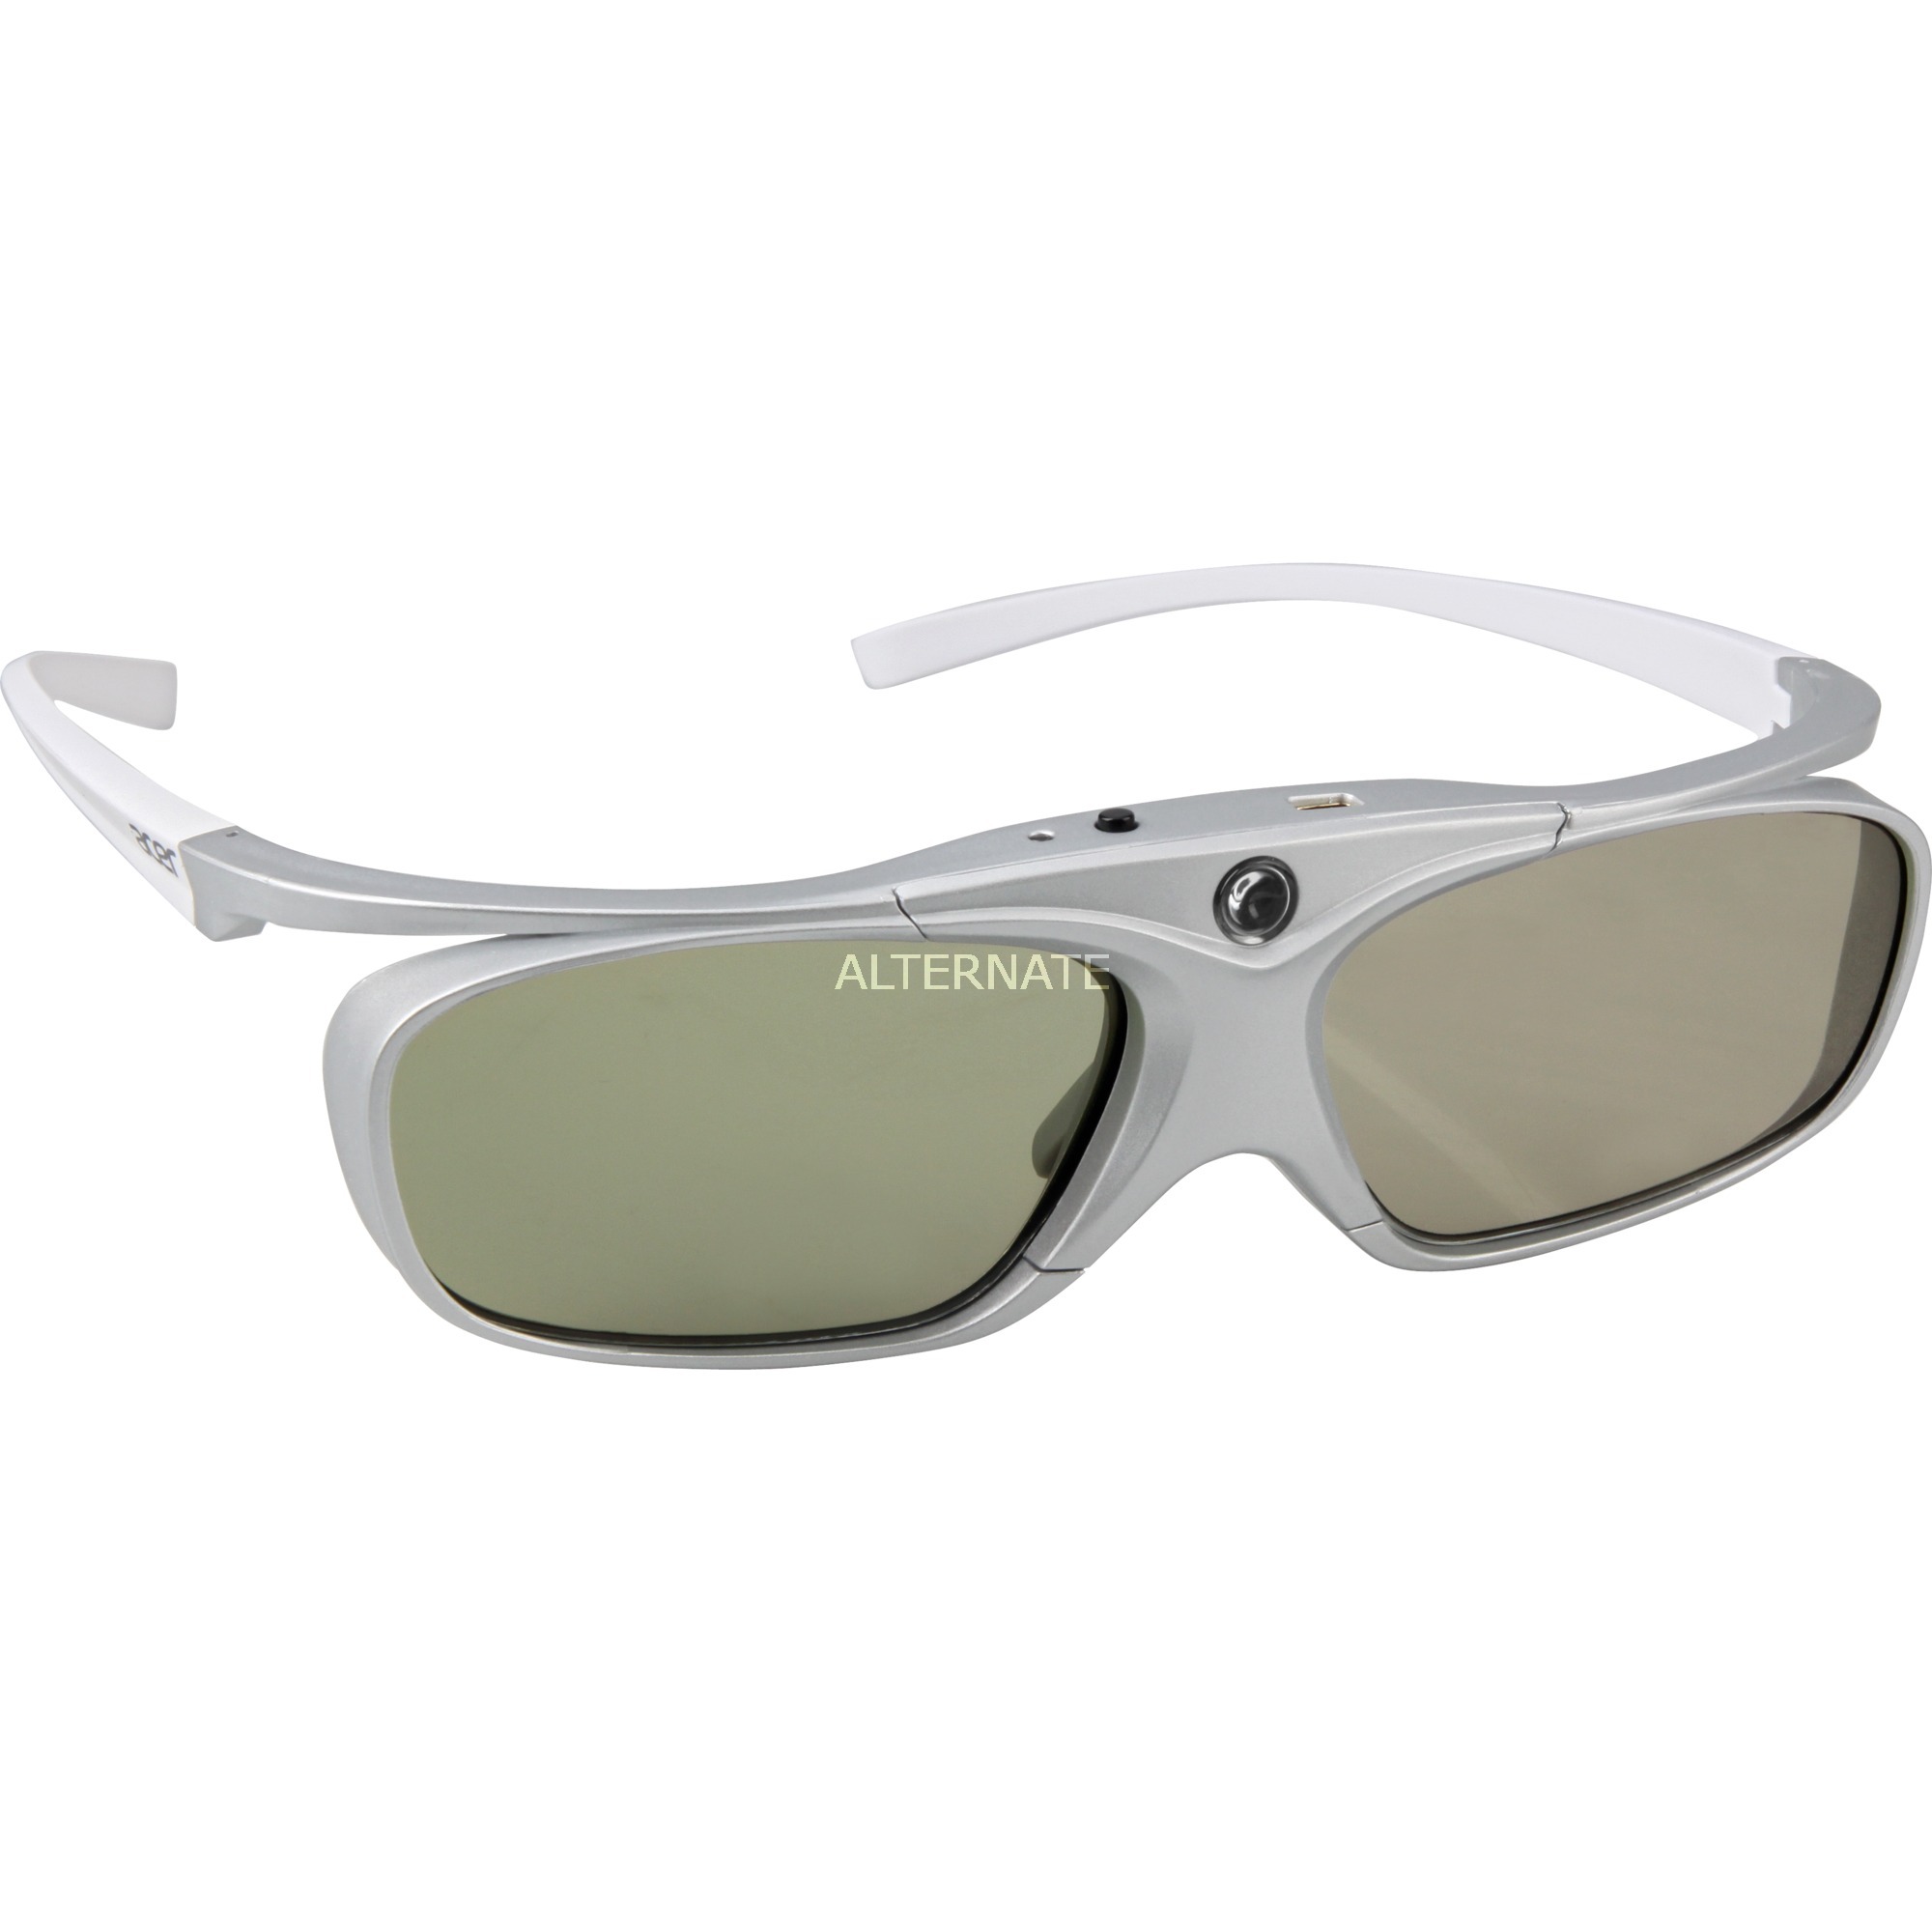 3D glasses E4w White / Silver Srebrny, Biały 1szt. stereoskopowe okulary 3D